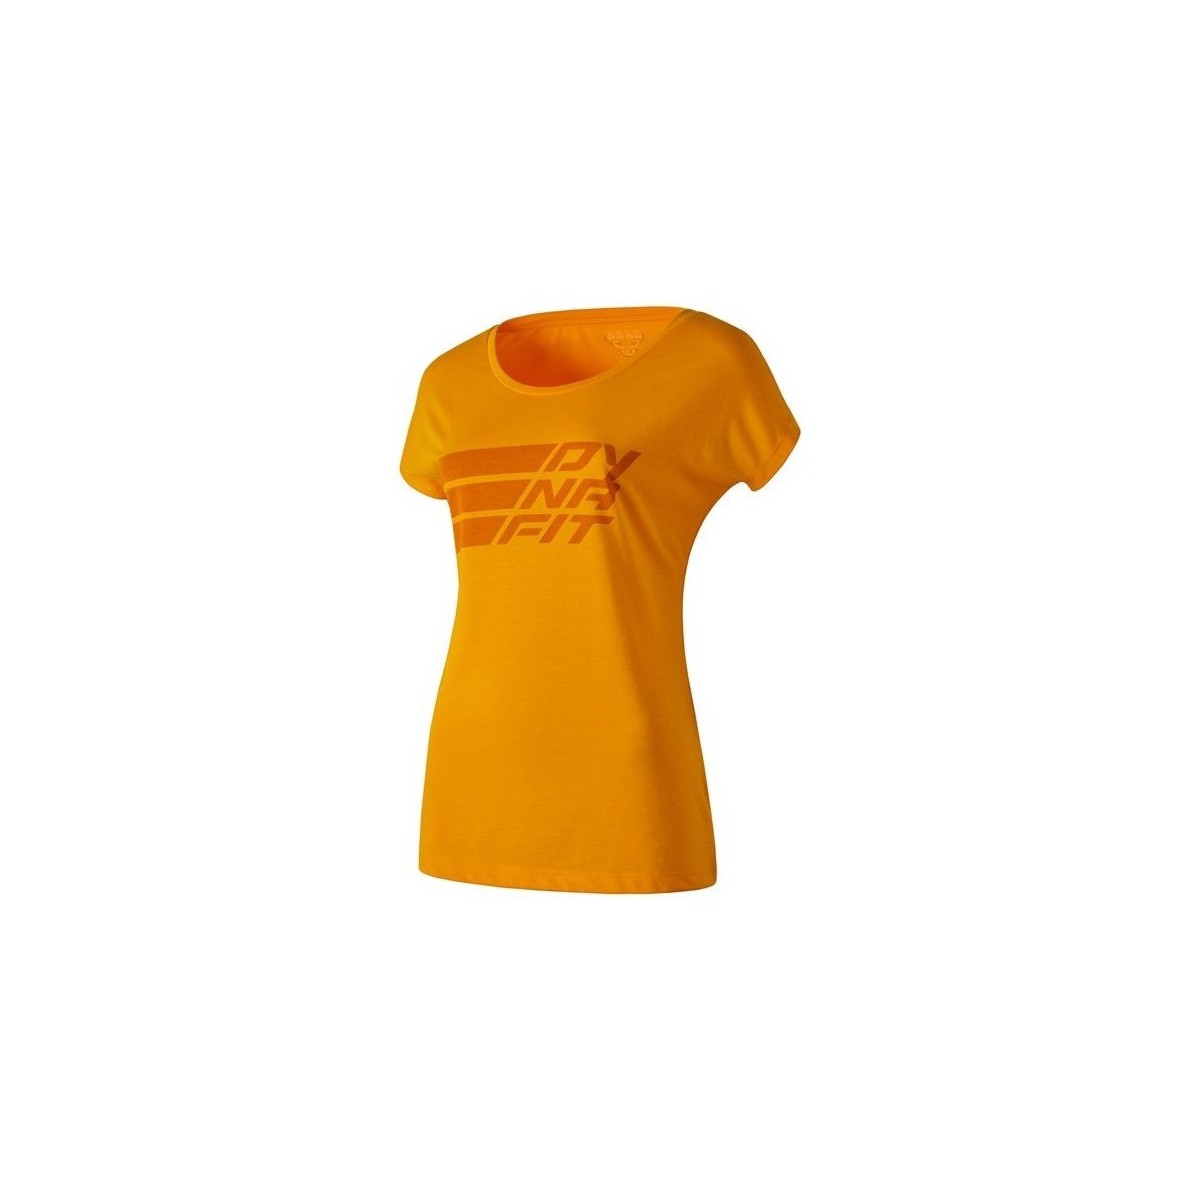 Kleidung Damen T-Shirts Dynafit Compound Dri Rel CO W SS Orange